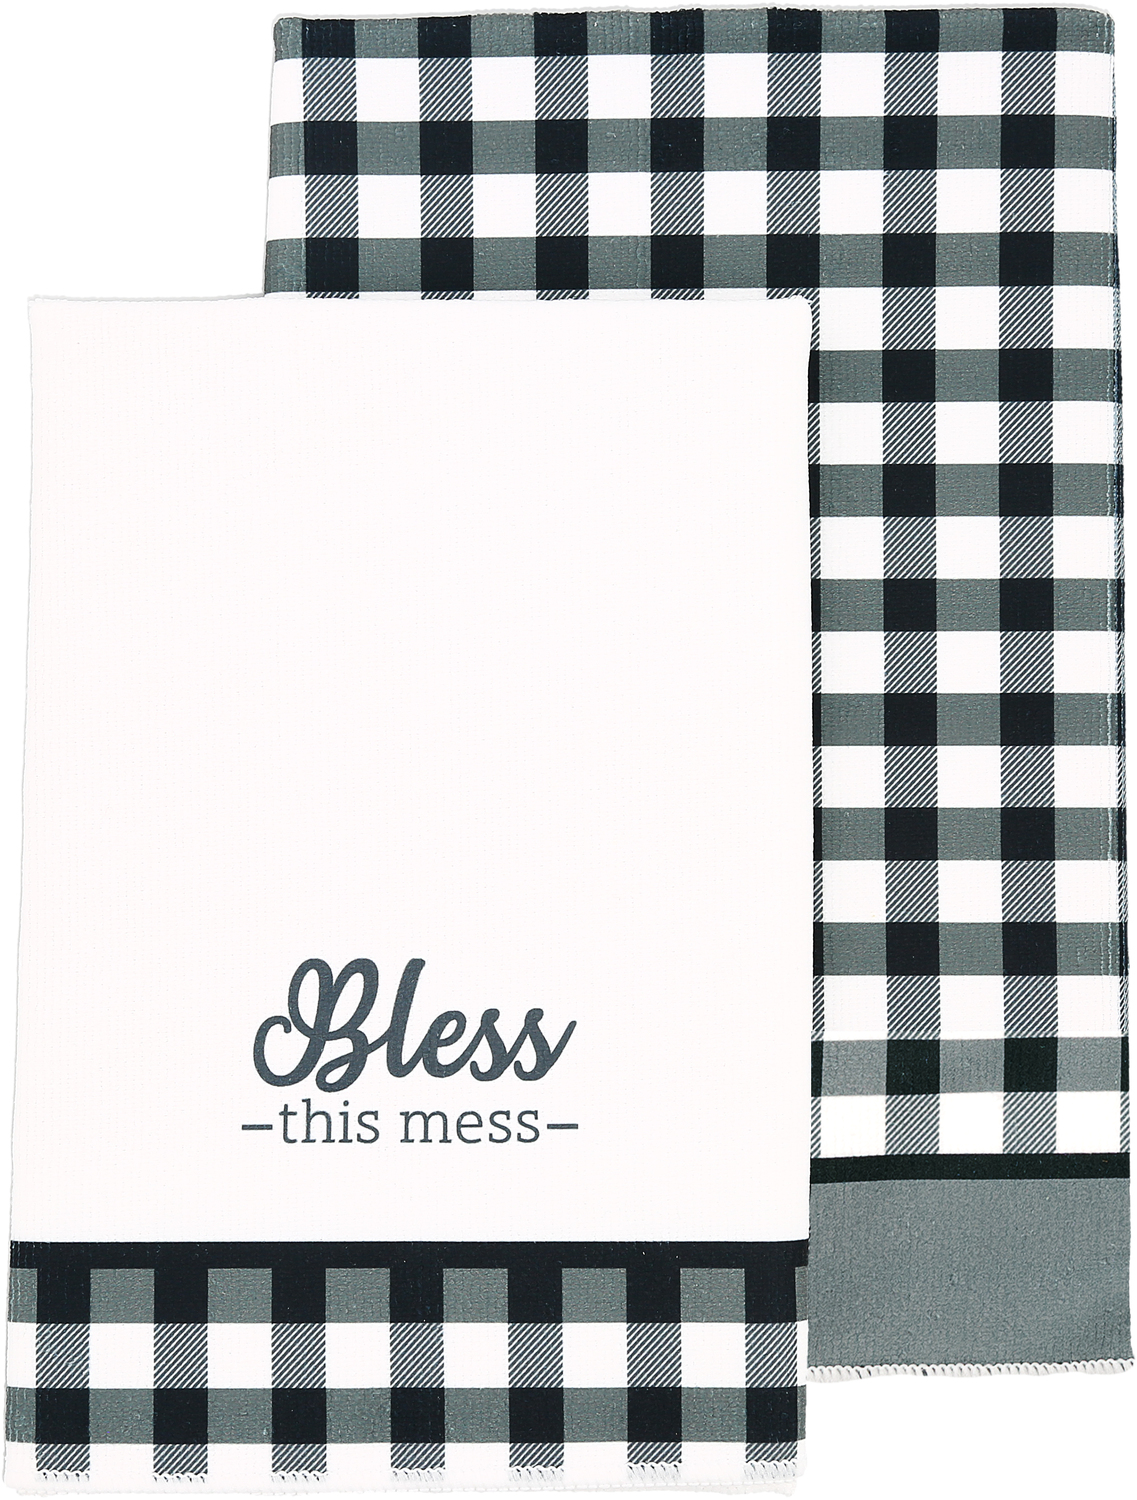 Bless by Farmhouse Family - Bless - Tea Towel Gift Set
(2 - 19.75" x 27.5")